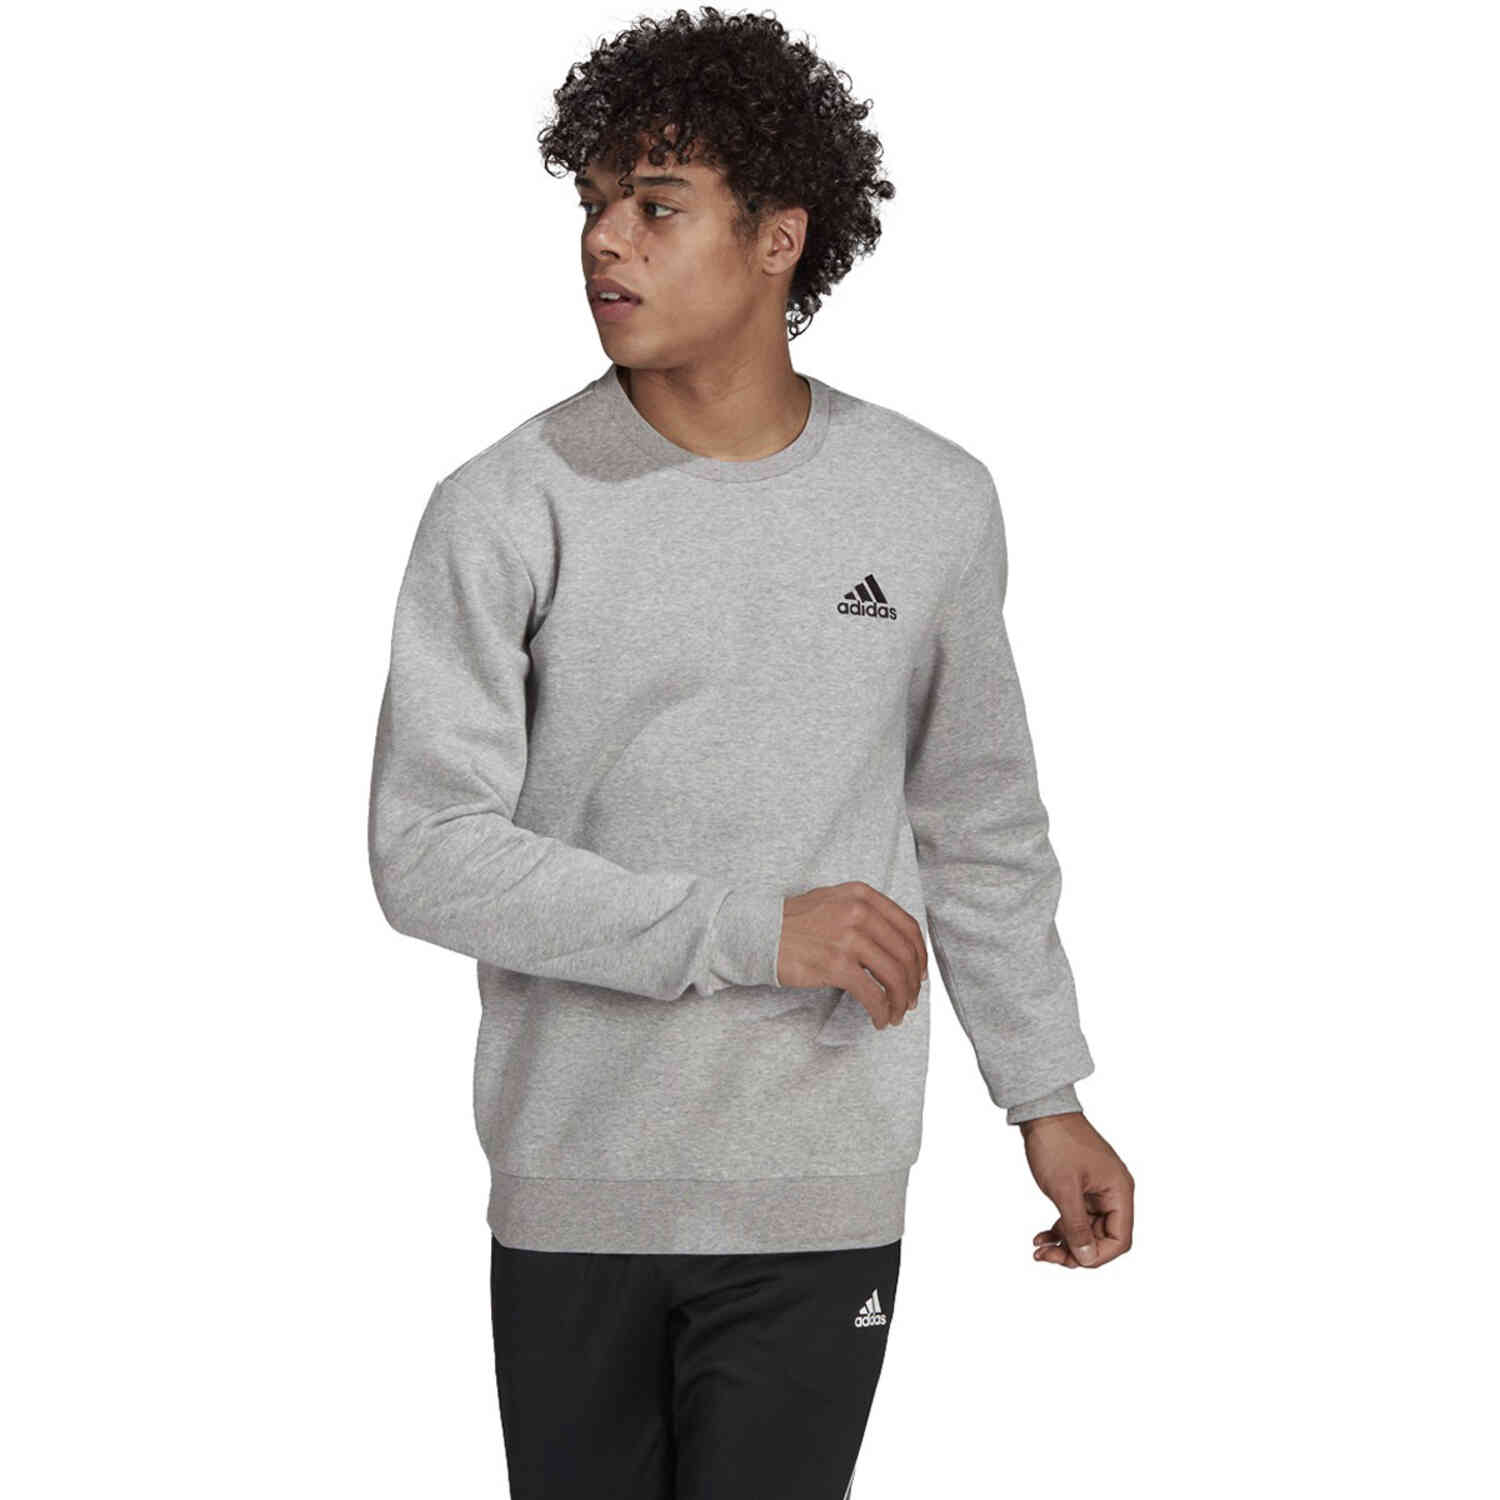 Medium SoccerPro Sweatshirt - Heather/Black Essentials adidas Cozy - Grey